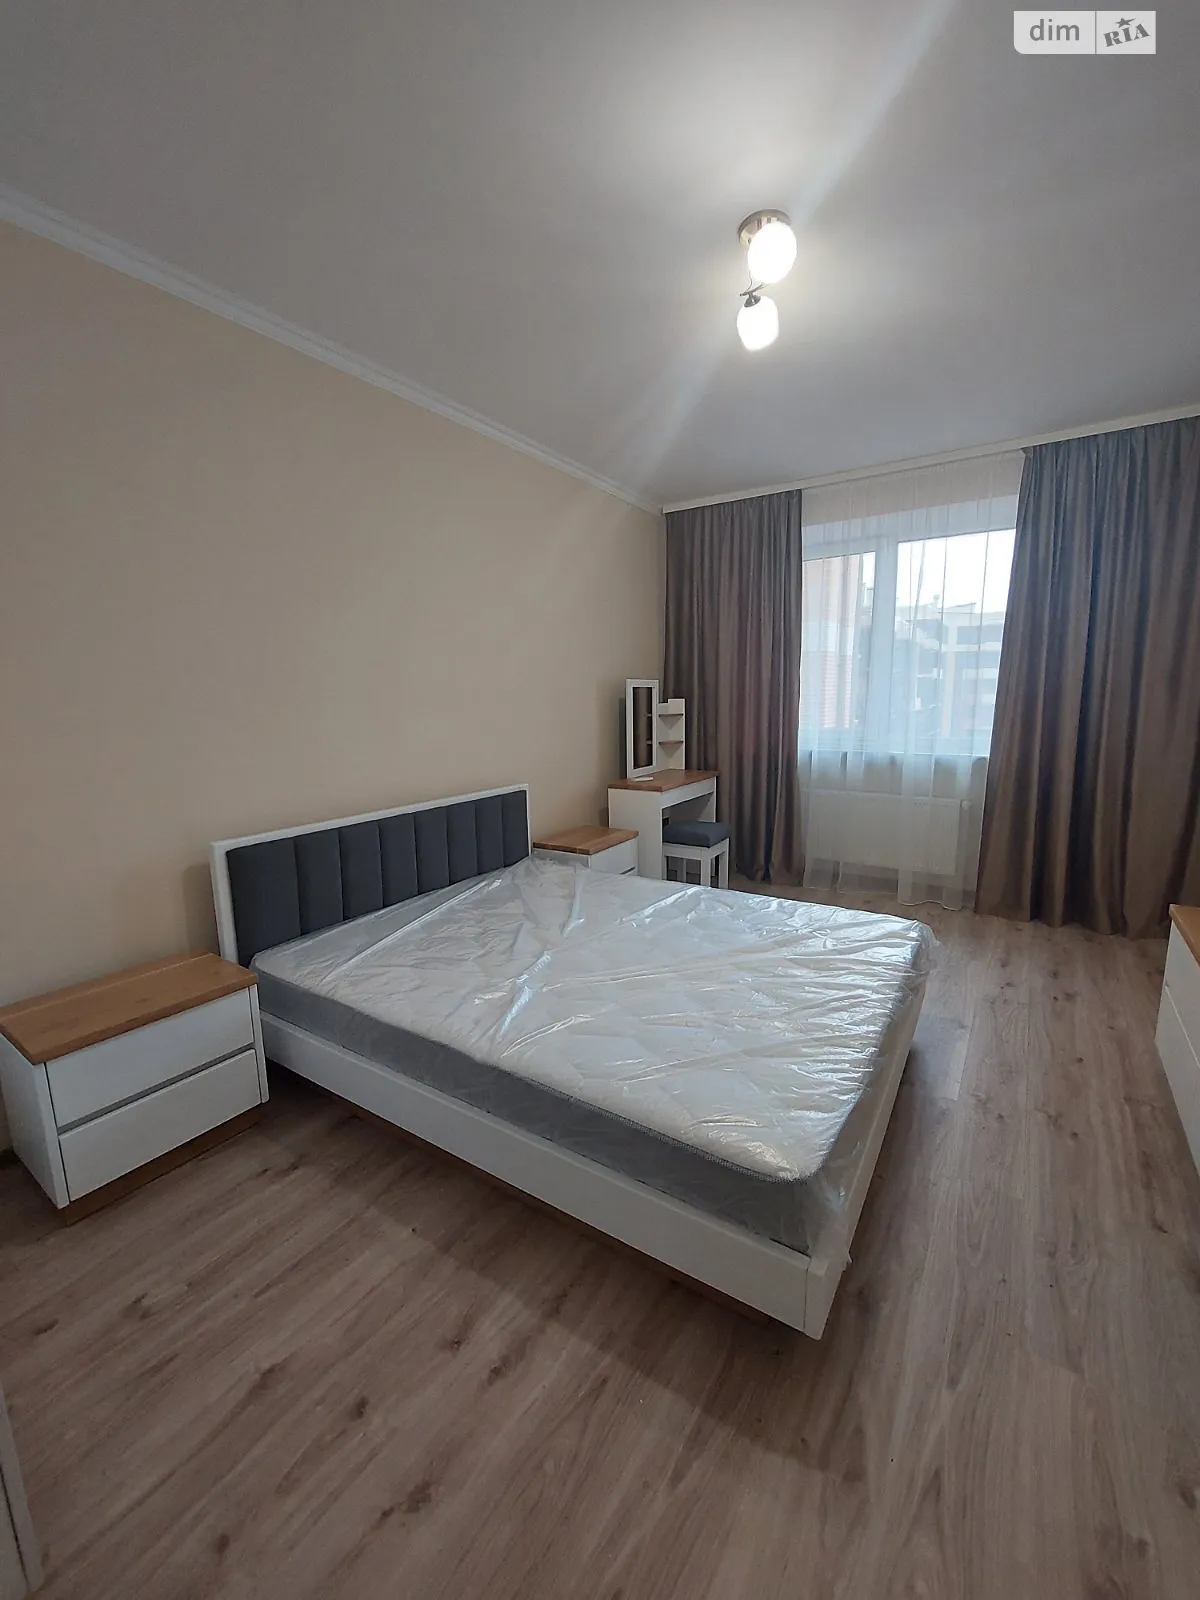 2-кімнатна квартира 70 кв. м у Луцьку, цена: 20000 грн